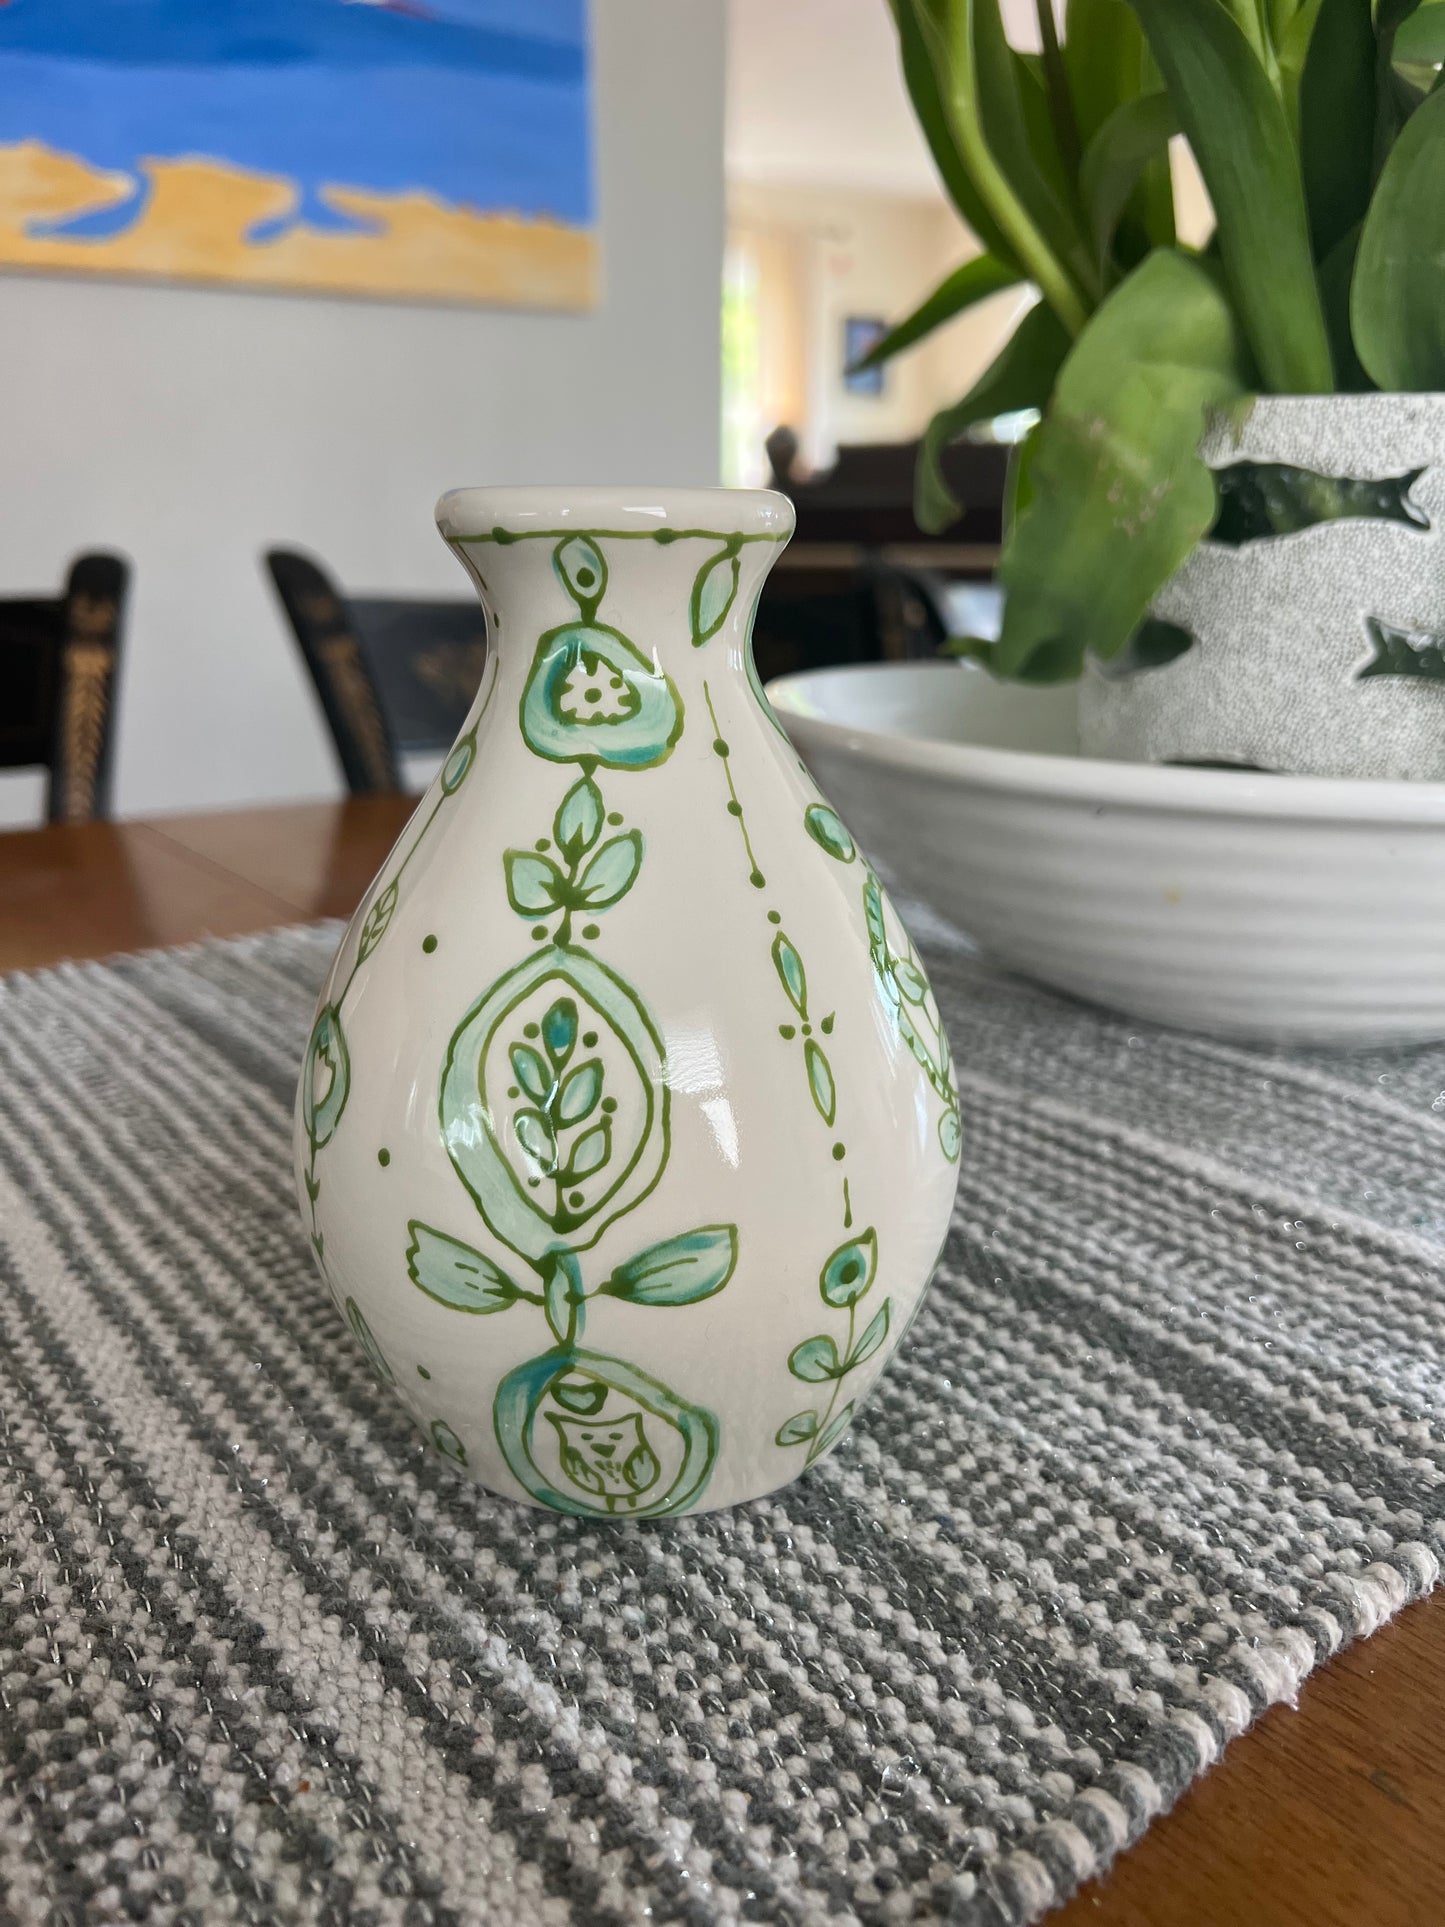 Pear shaped bud vase